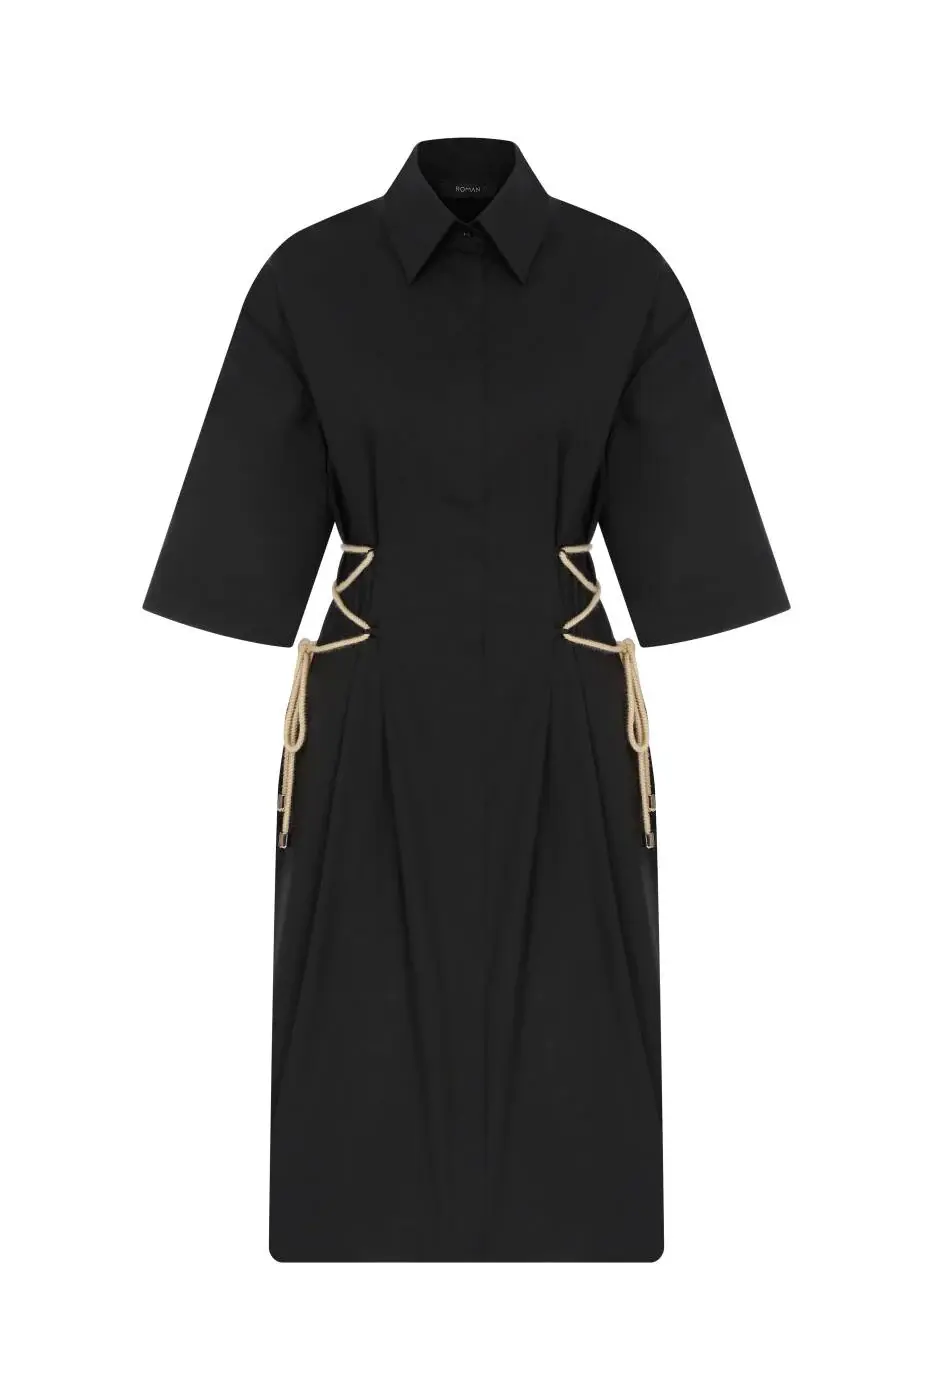 Roman Criss Cross Side Black Shirt Dress - 2 / Black. 1